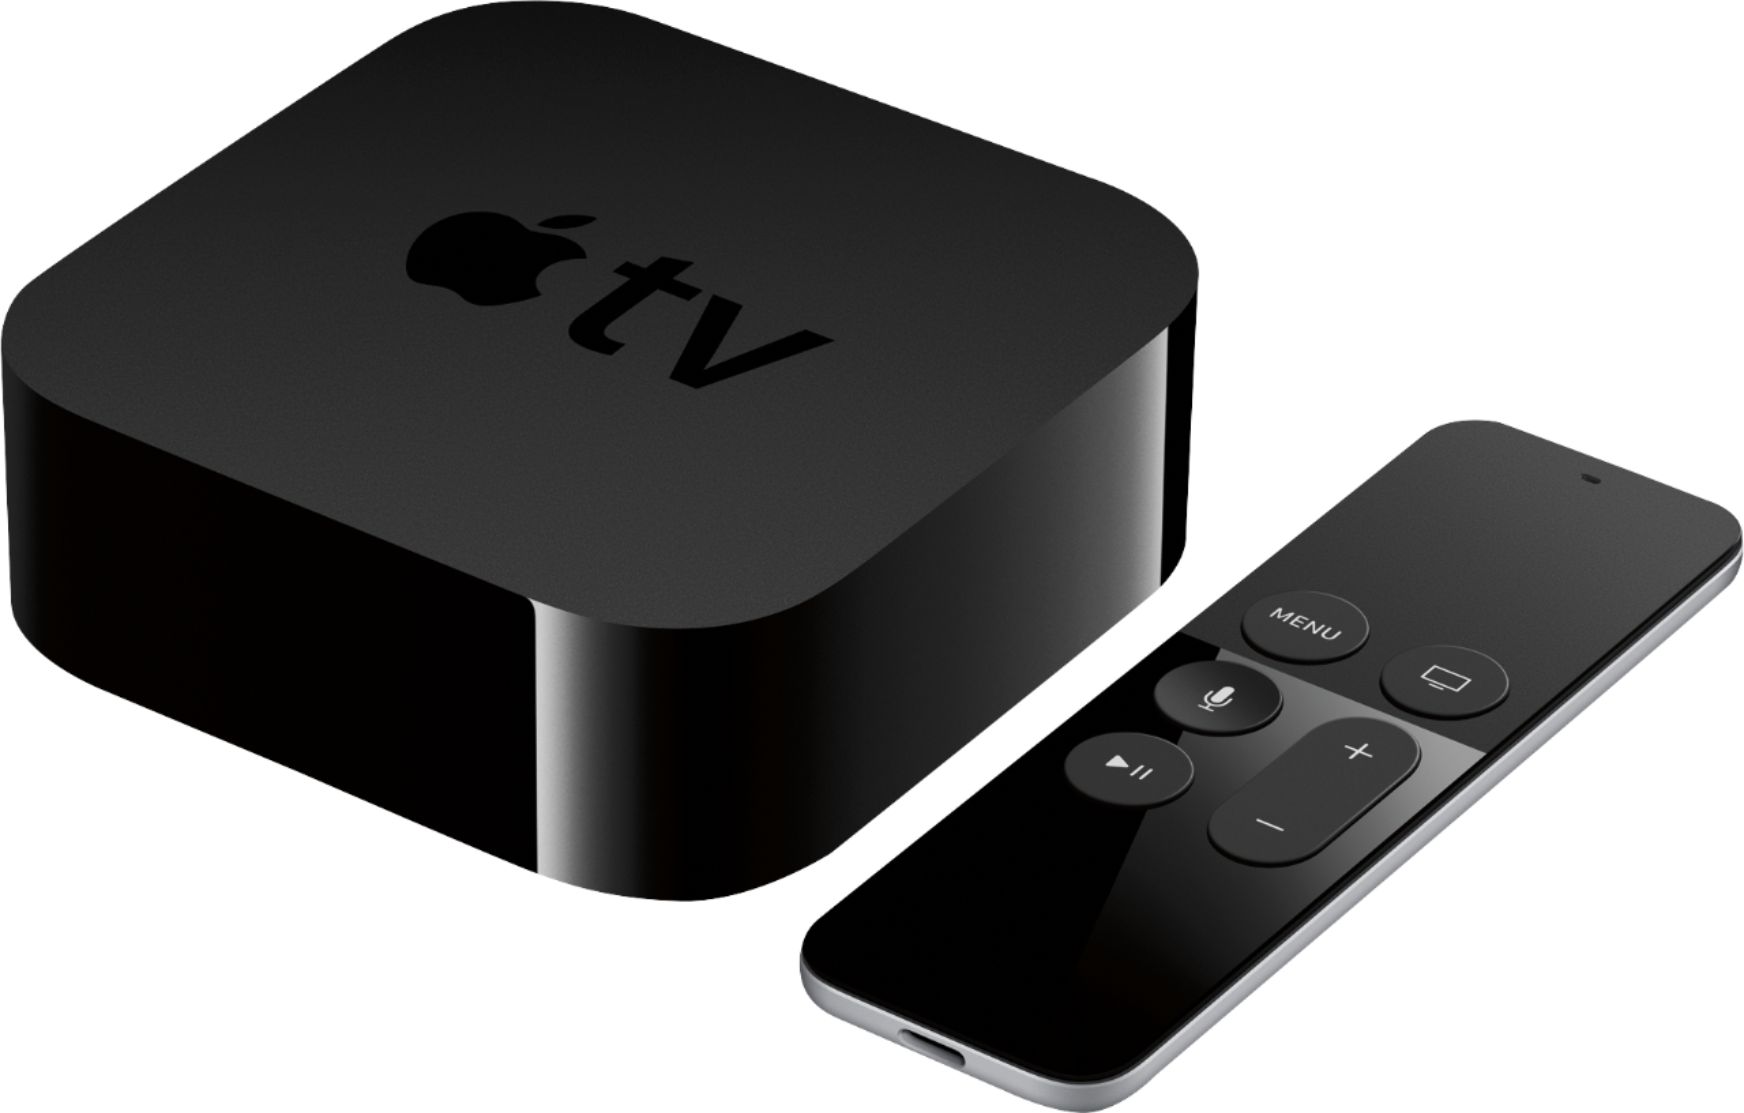 Bemyndigelse Fange Mysterium Best Buy: Apple TV – 32GB (4th Generation) Black MGY52LL/A